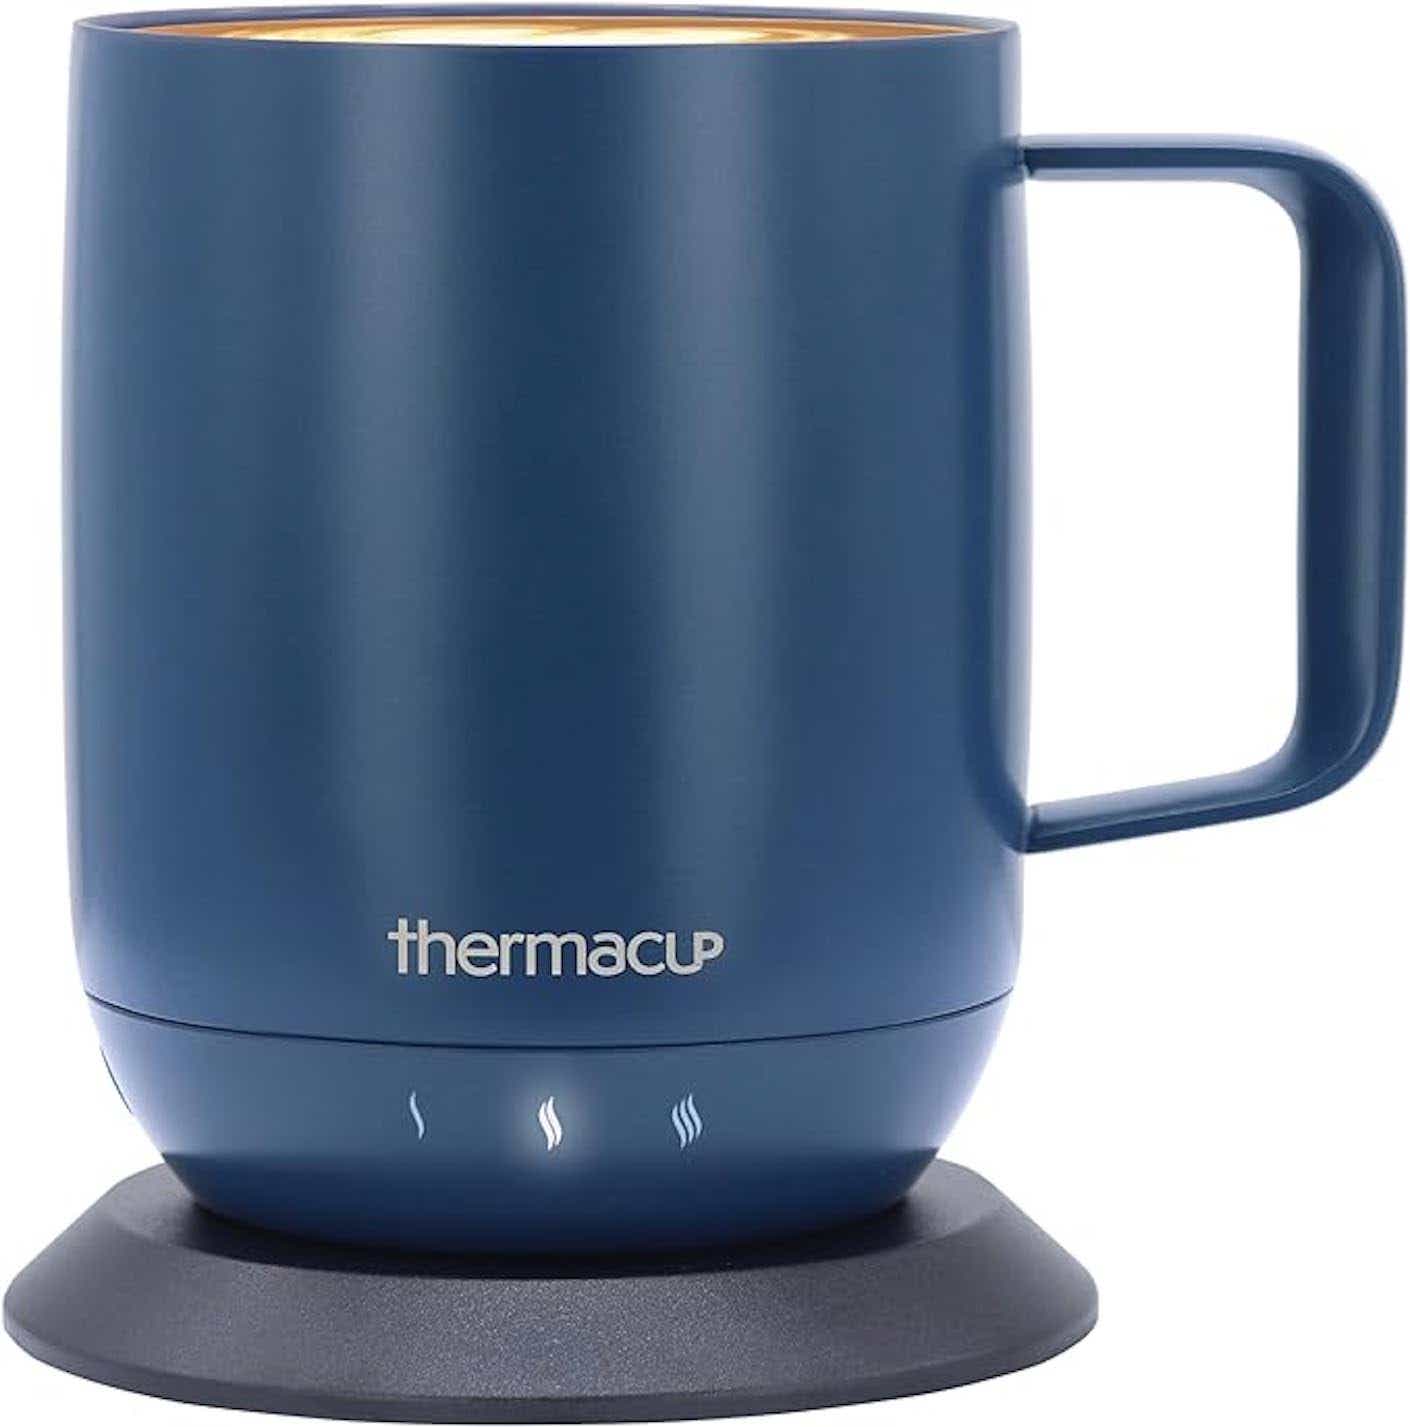 A mug on a heater